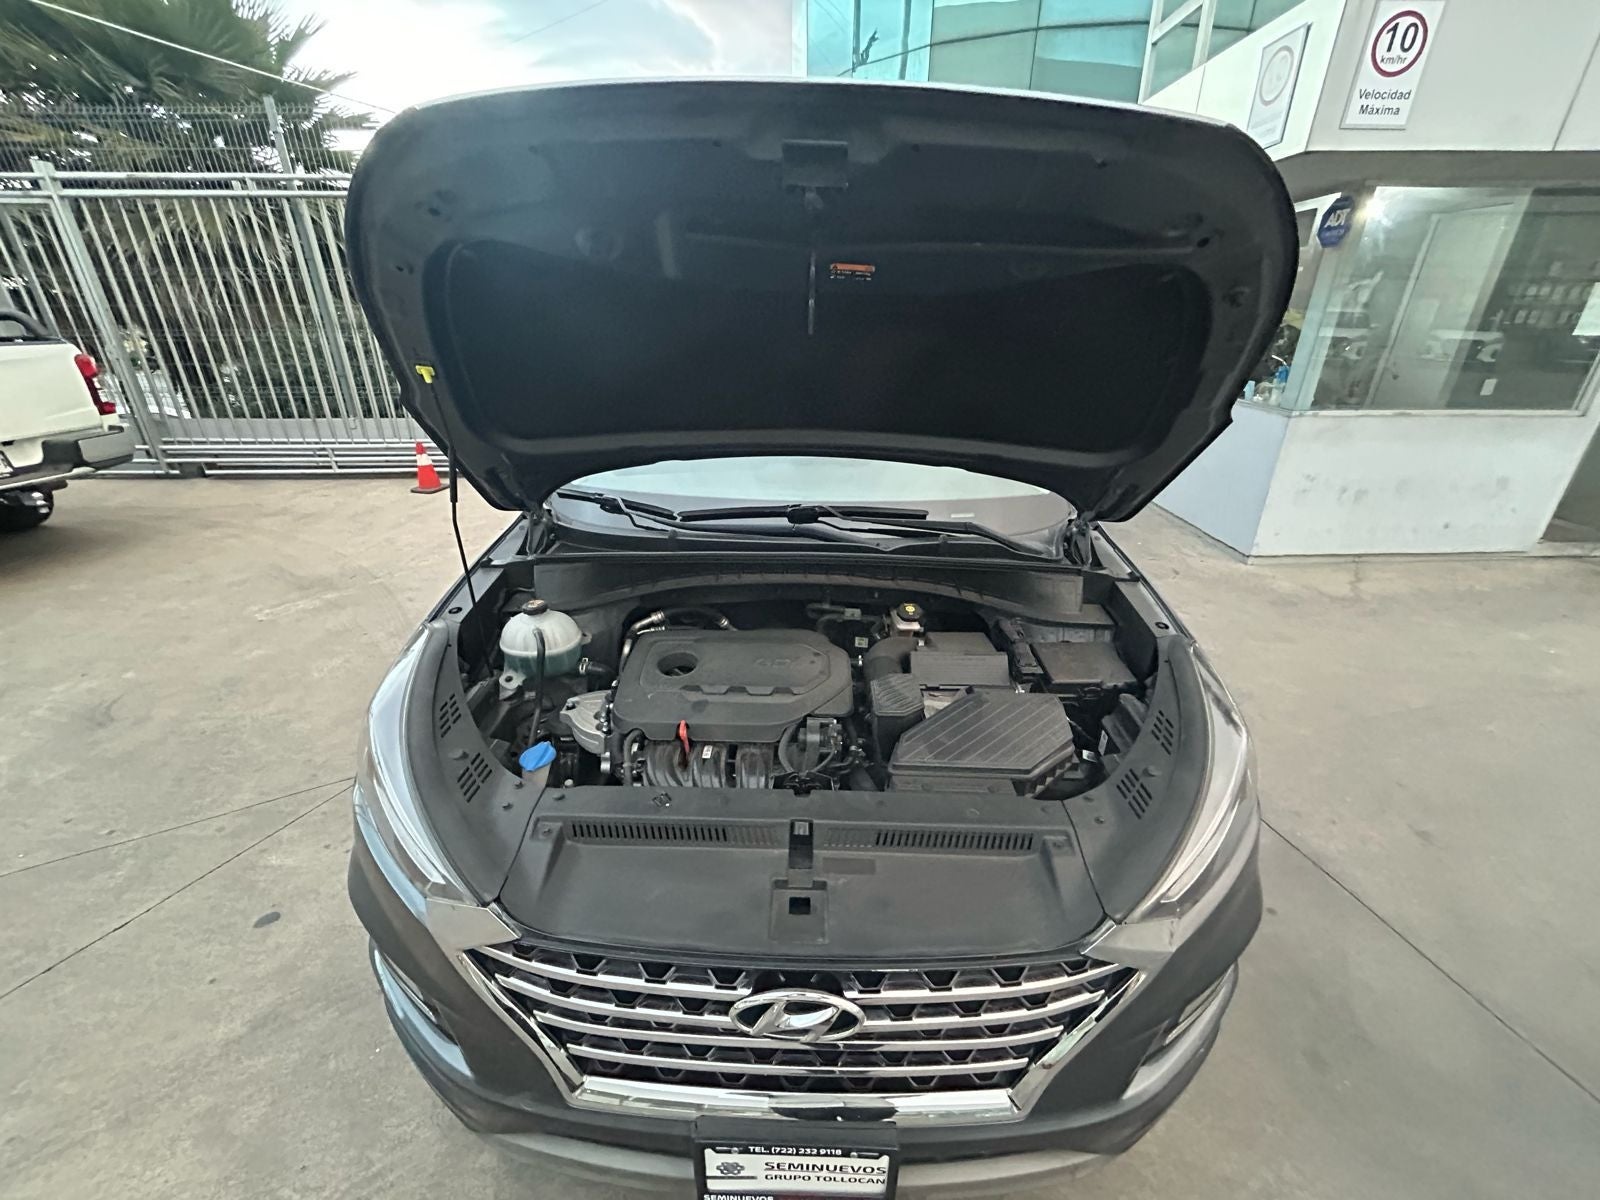 2019 Hyundai Tucson 2.4 Limited At